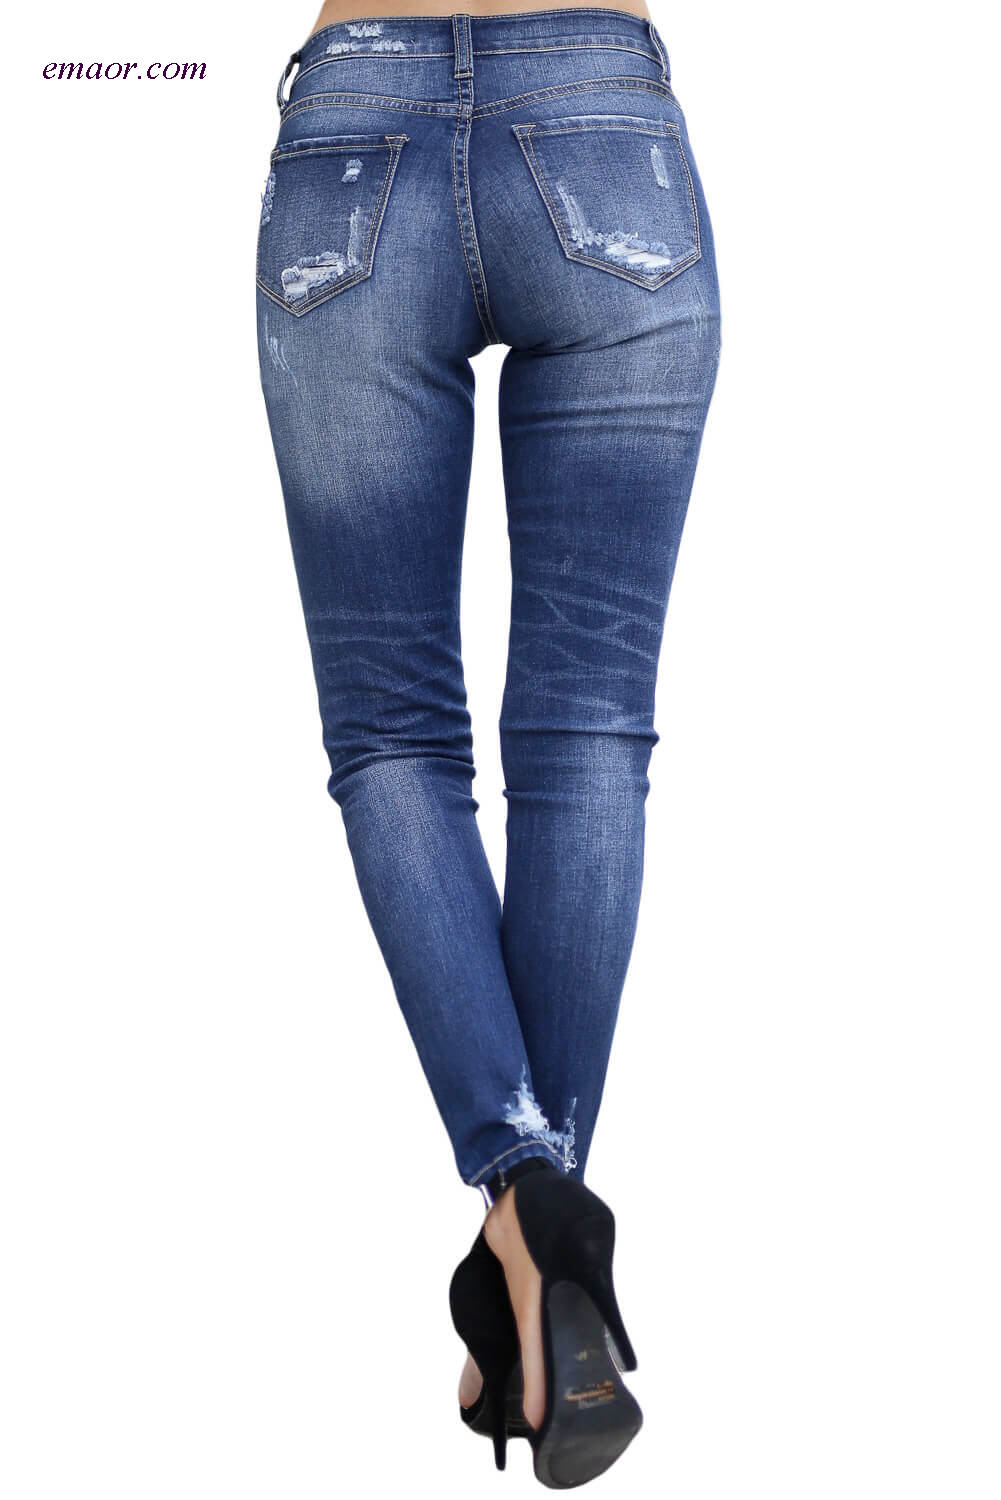 Capri Jeans Wholesale Modern Fashion Distressed Skinny Jeans 